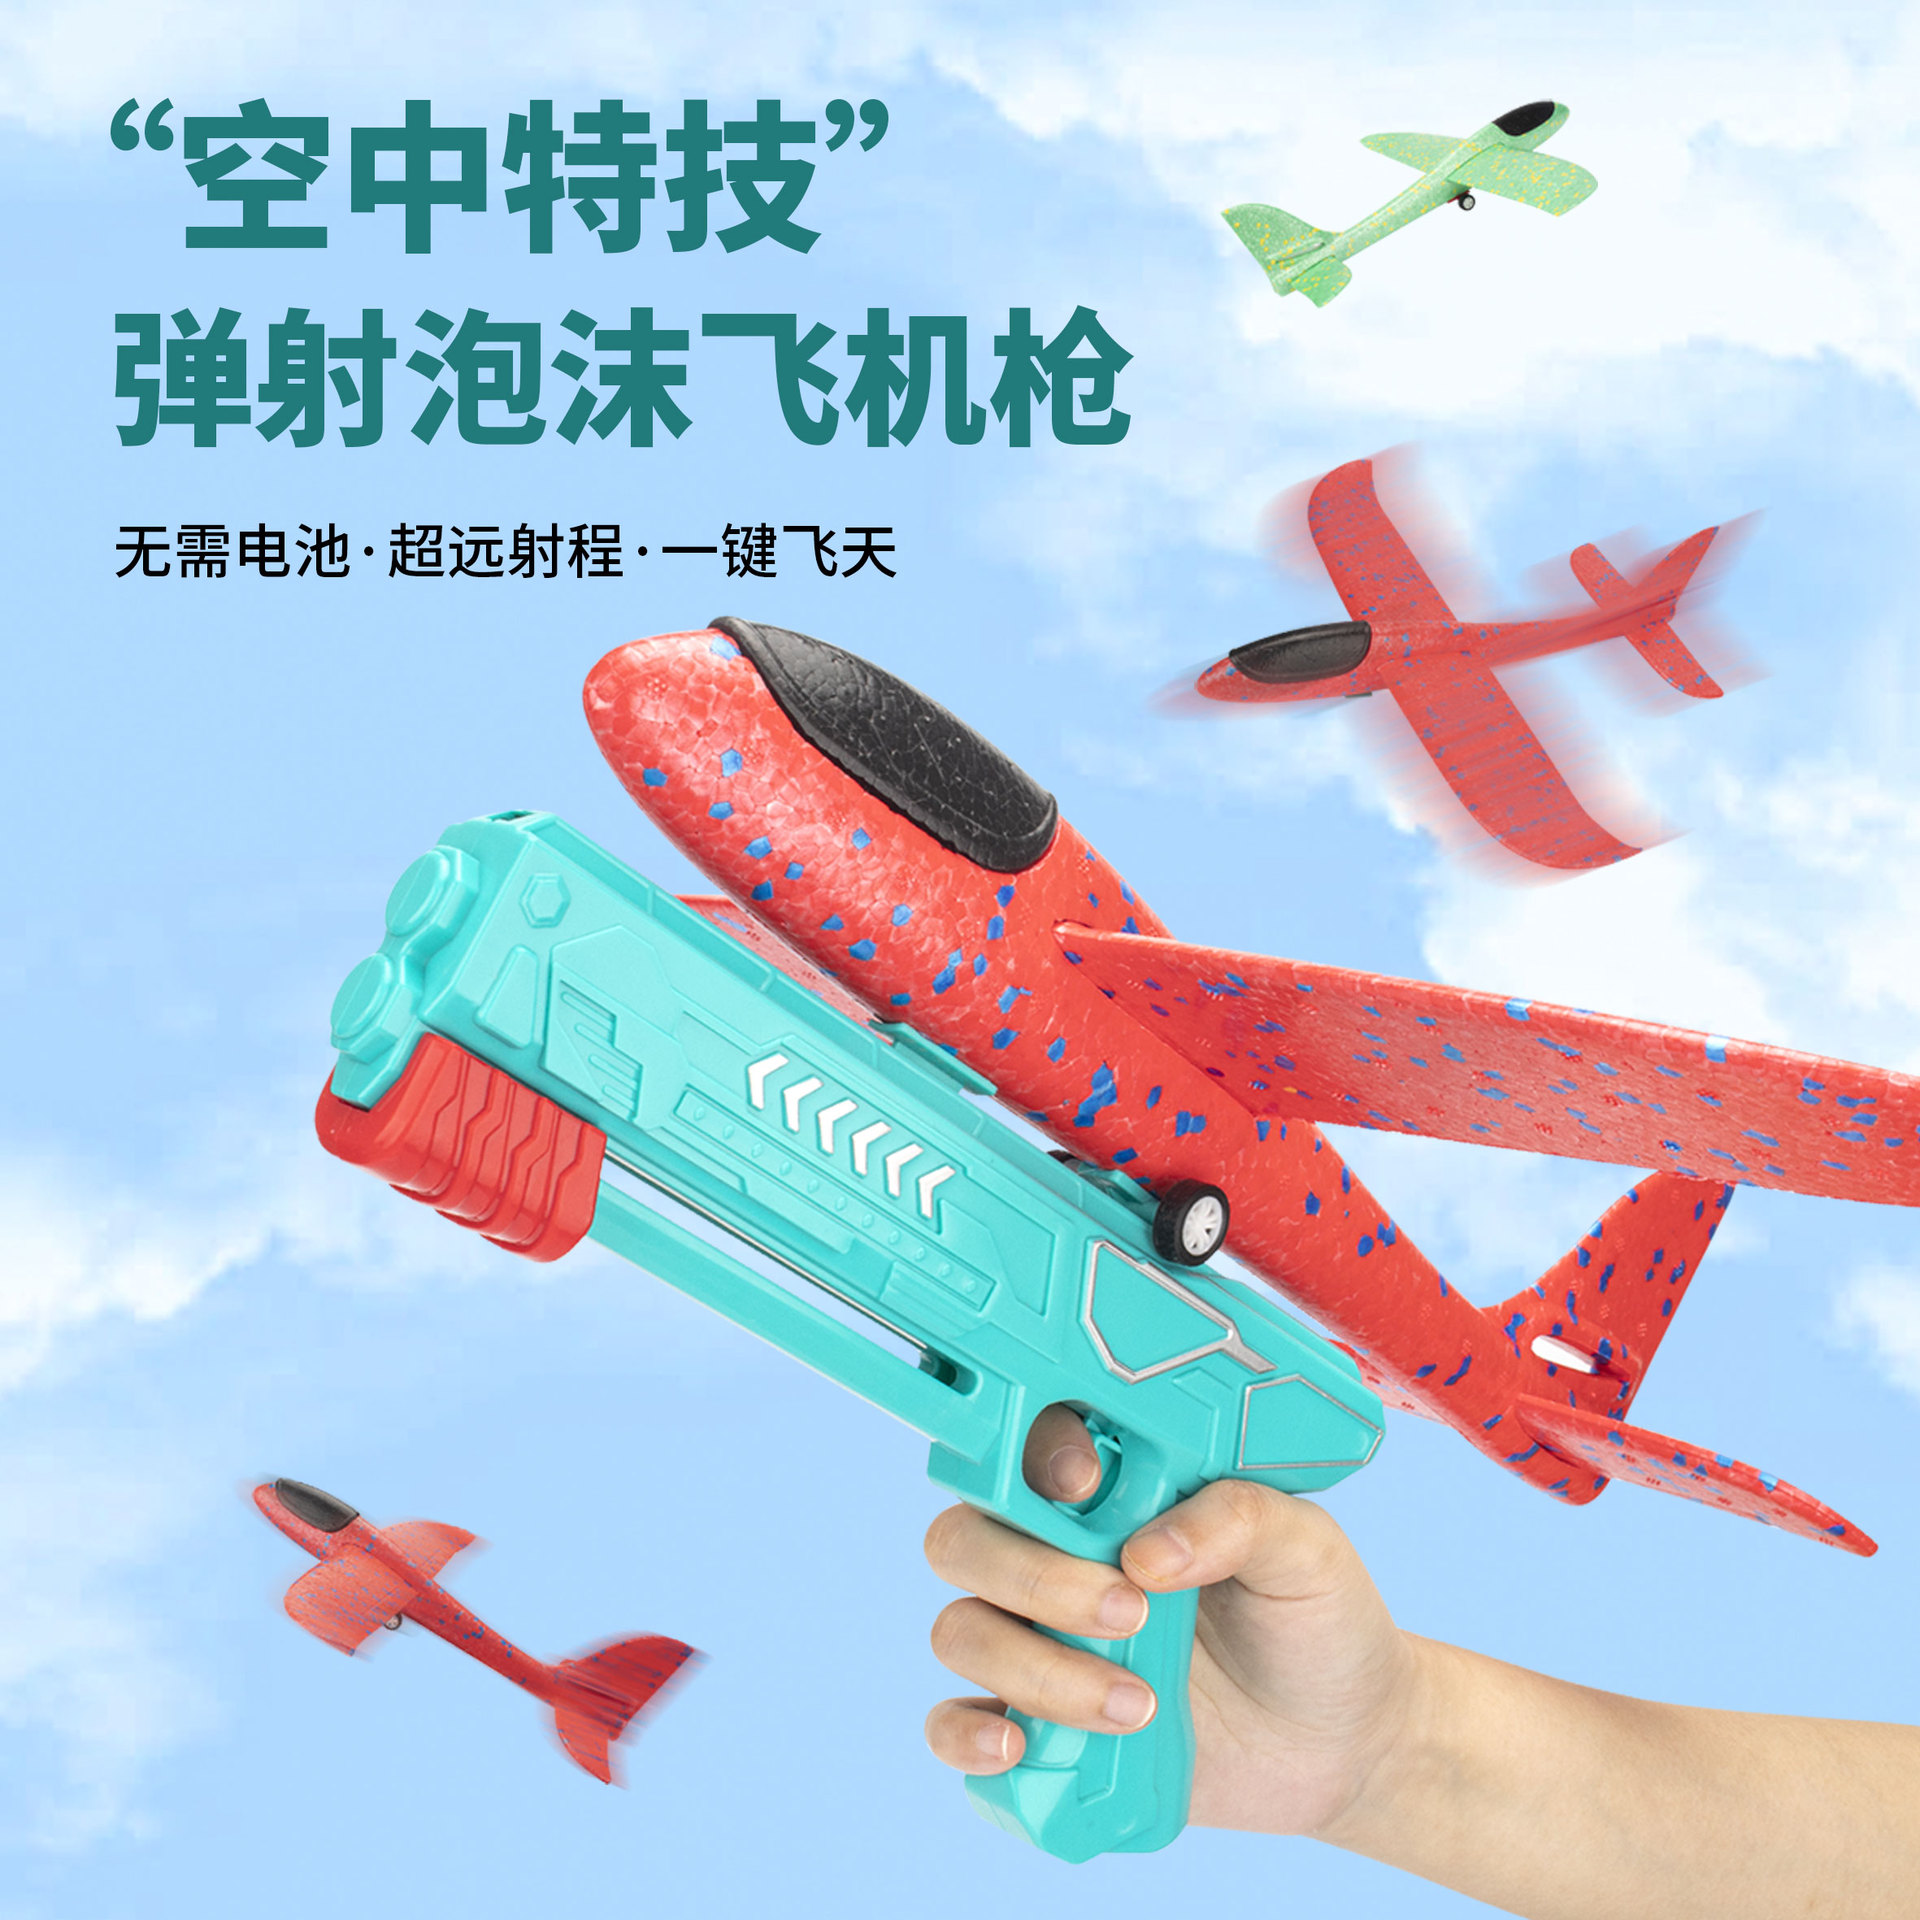 Internet Celebrity Bubble Plane Drop-Resistant Boys' Outdoor Launch Hand Throw Boys' Children's Toys